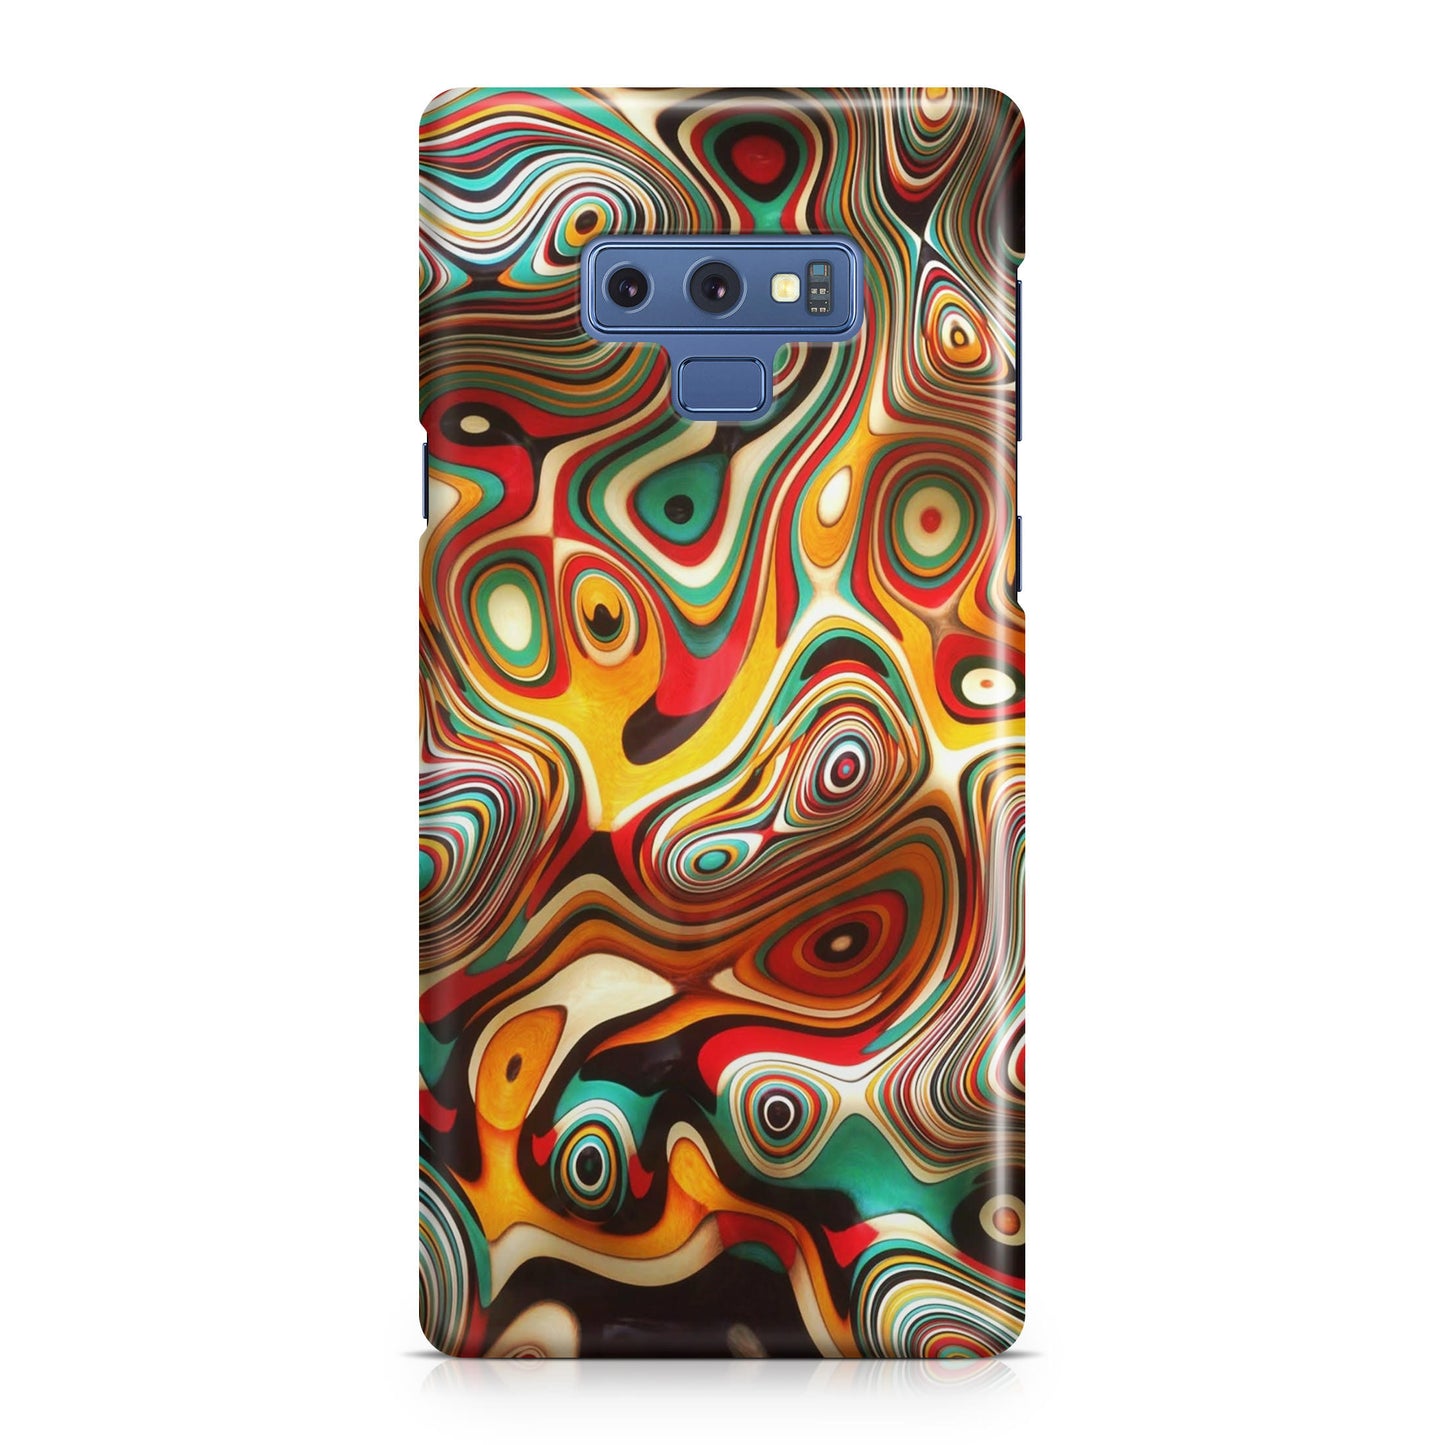 Plywood Art Galaxy Note 9 Case